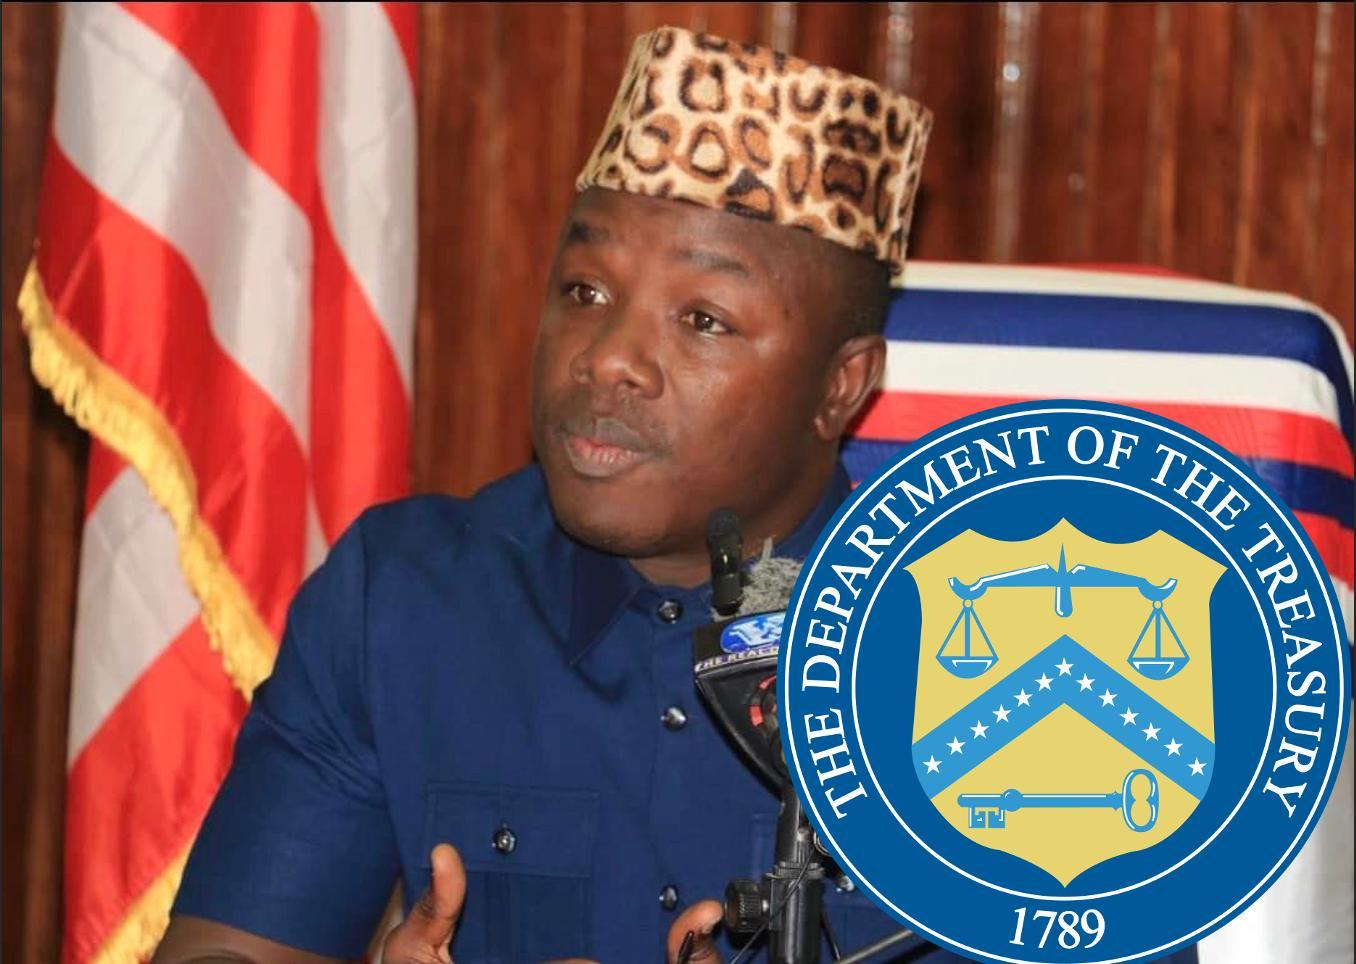 Liberian Mayor Jefferson Koijee Sanctioned for Human Rights Violations